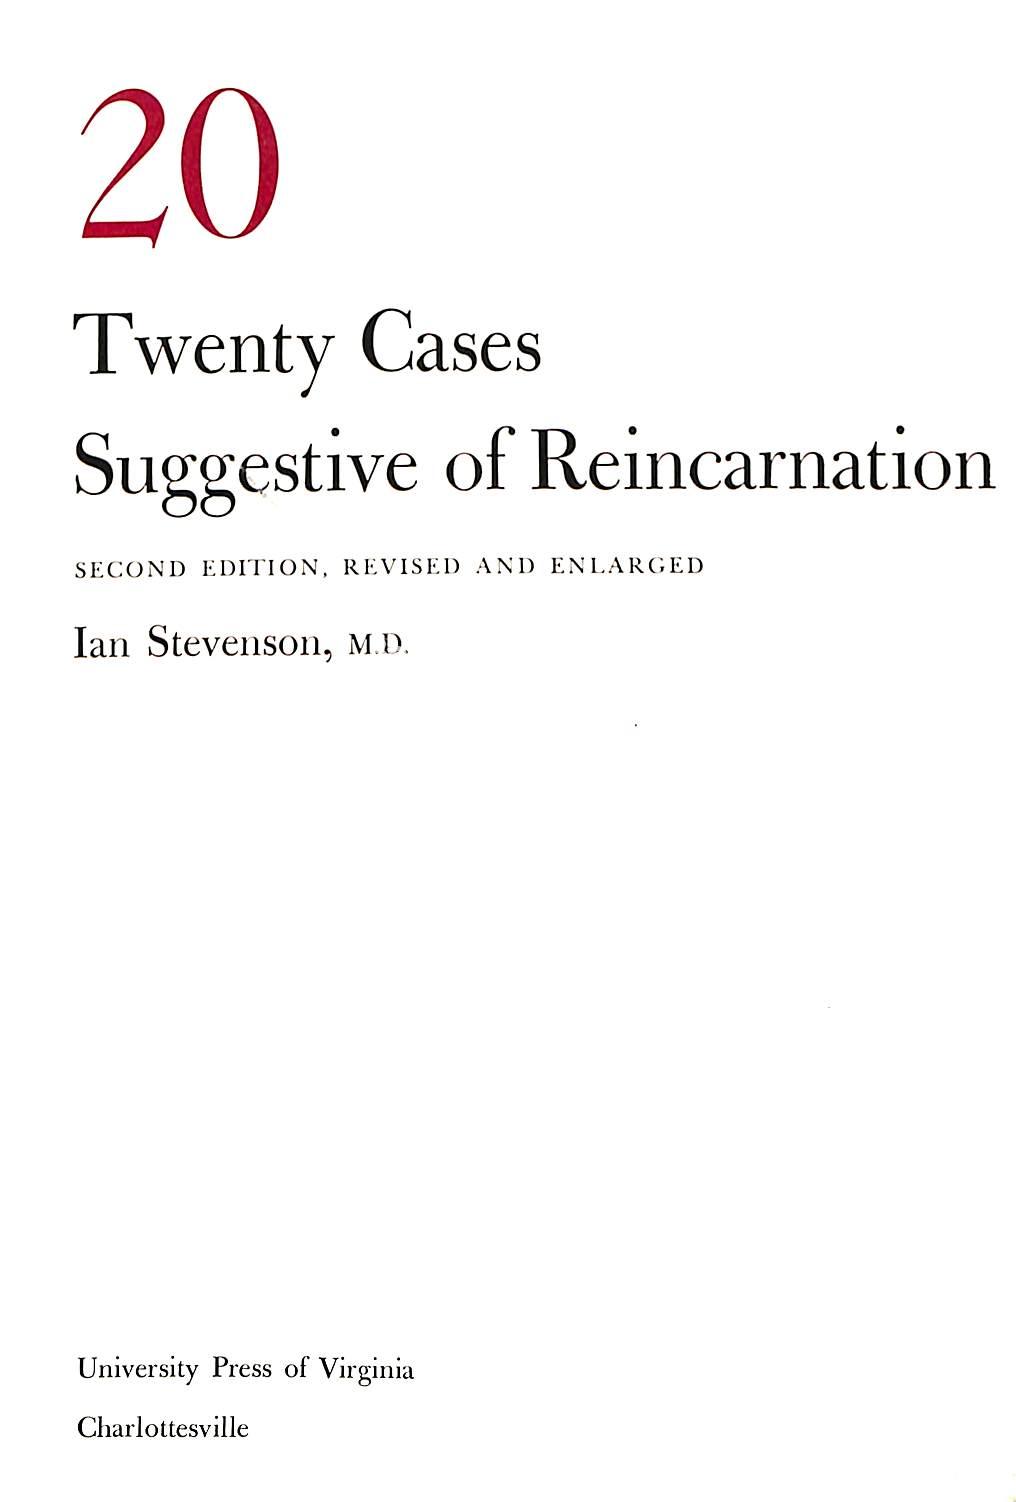 Twenty Cases Suggestive of Reincarnation